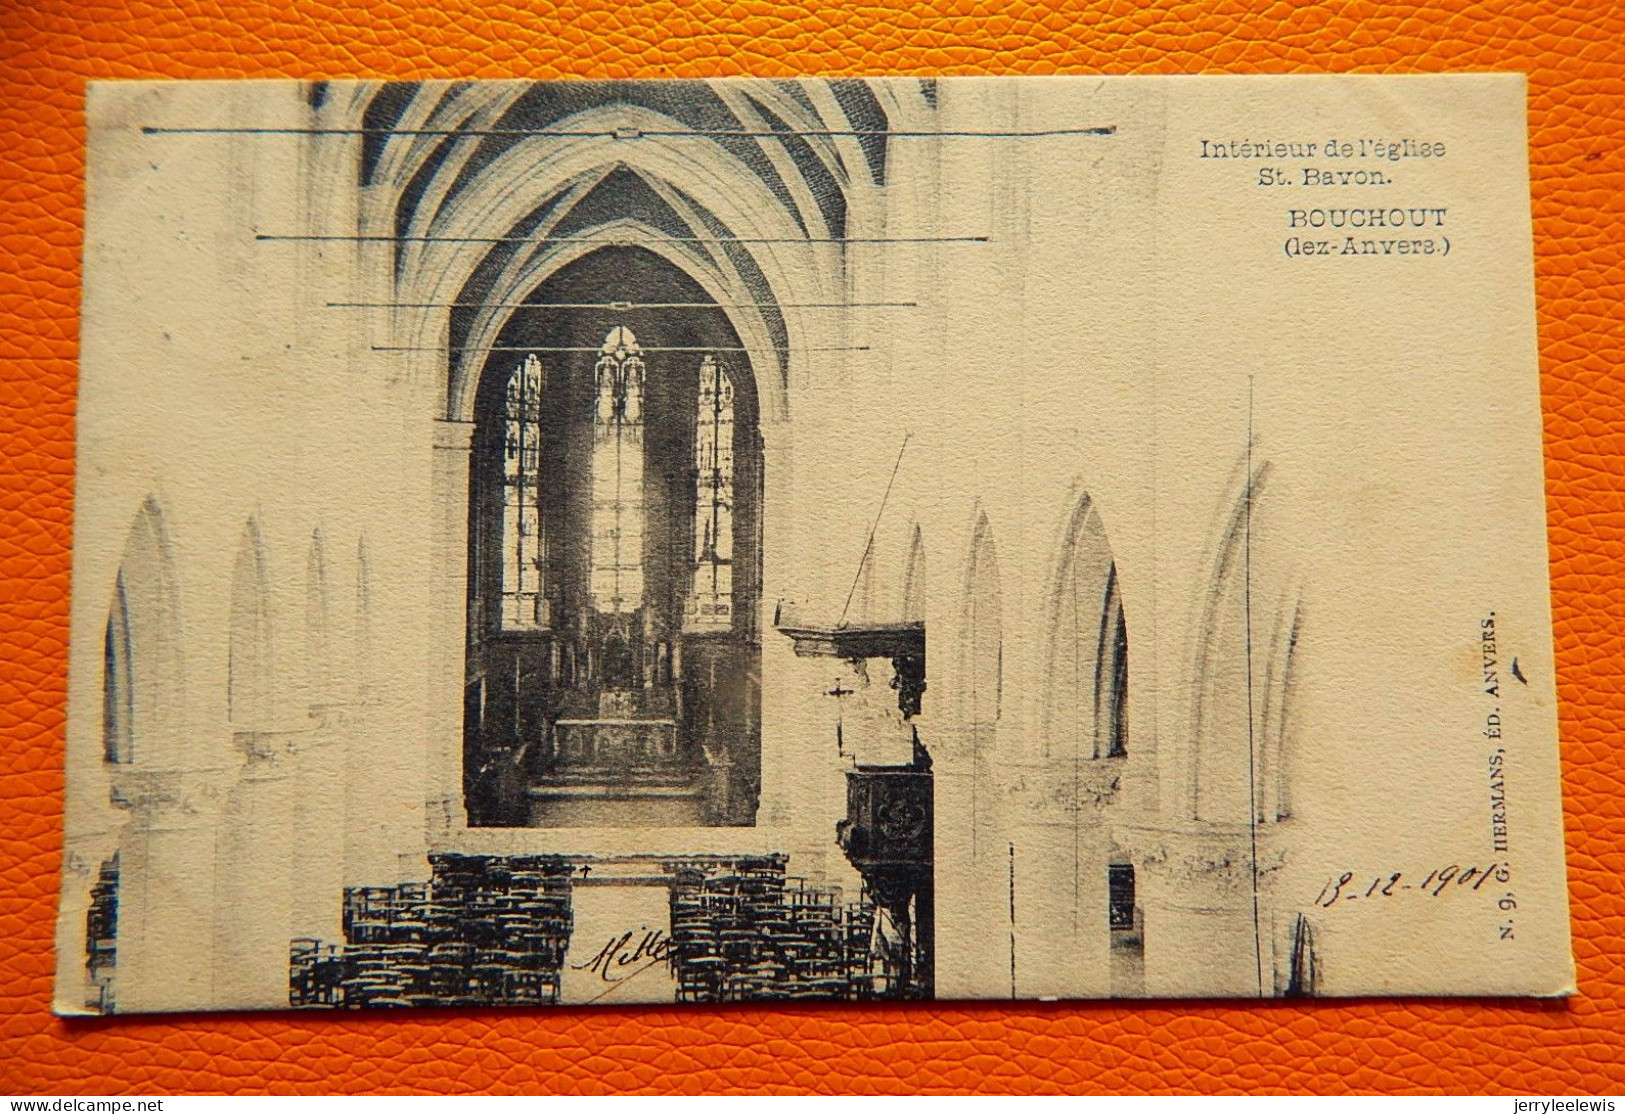 BOECHOUT - BOUCHOUT -   Binnenzicht Der Kerk  St Bavon - Intérieur De L'église St Bavon  -  1901 - Boechout